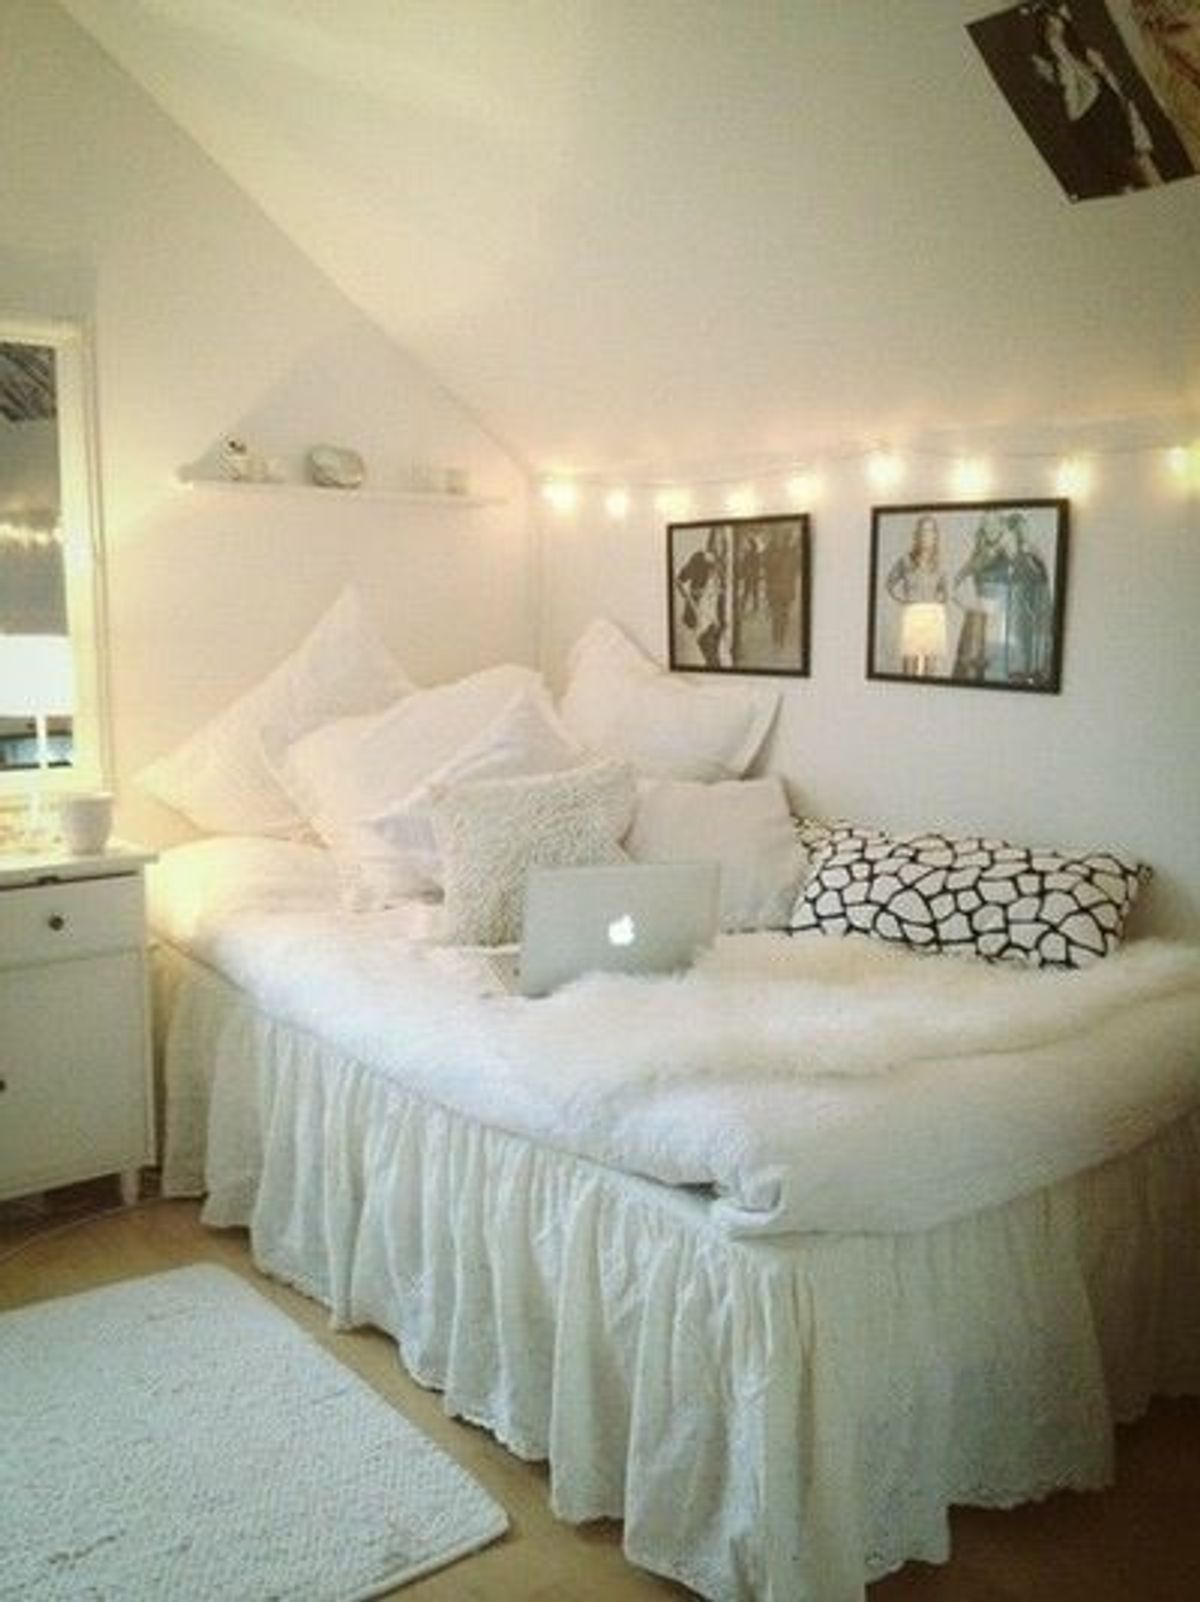 Wonderful tumblr bedroom 7 Ways To Make Your Room Tumblr Worthy